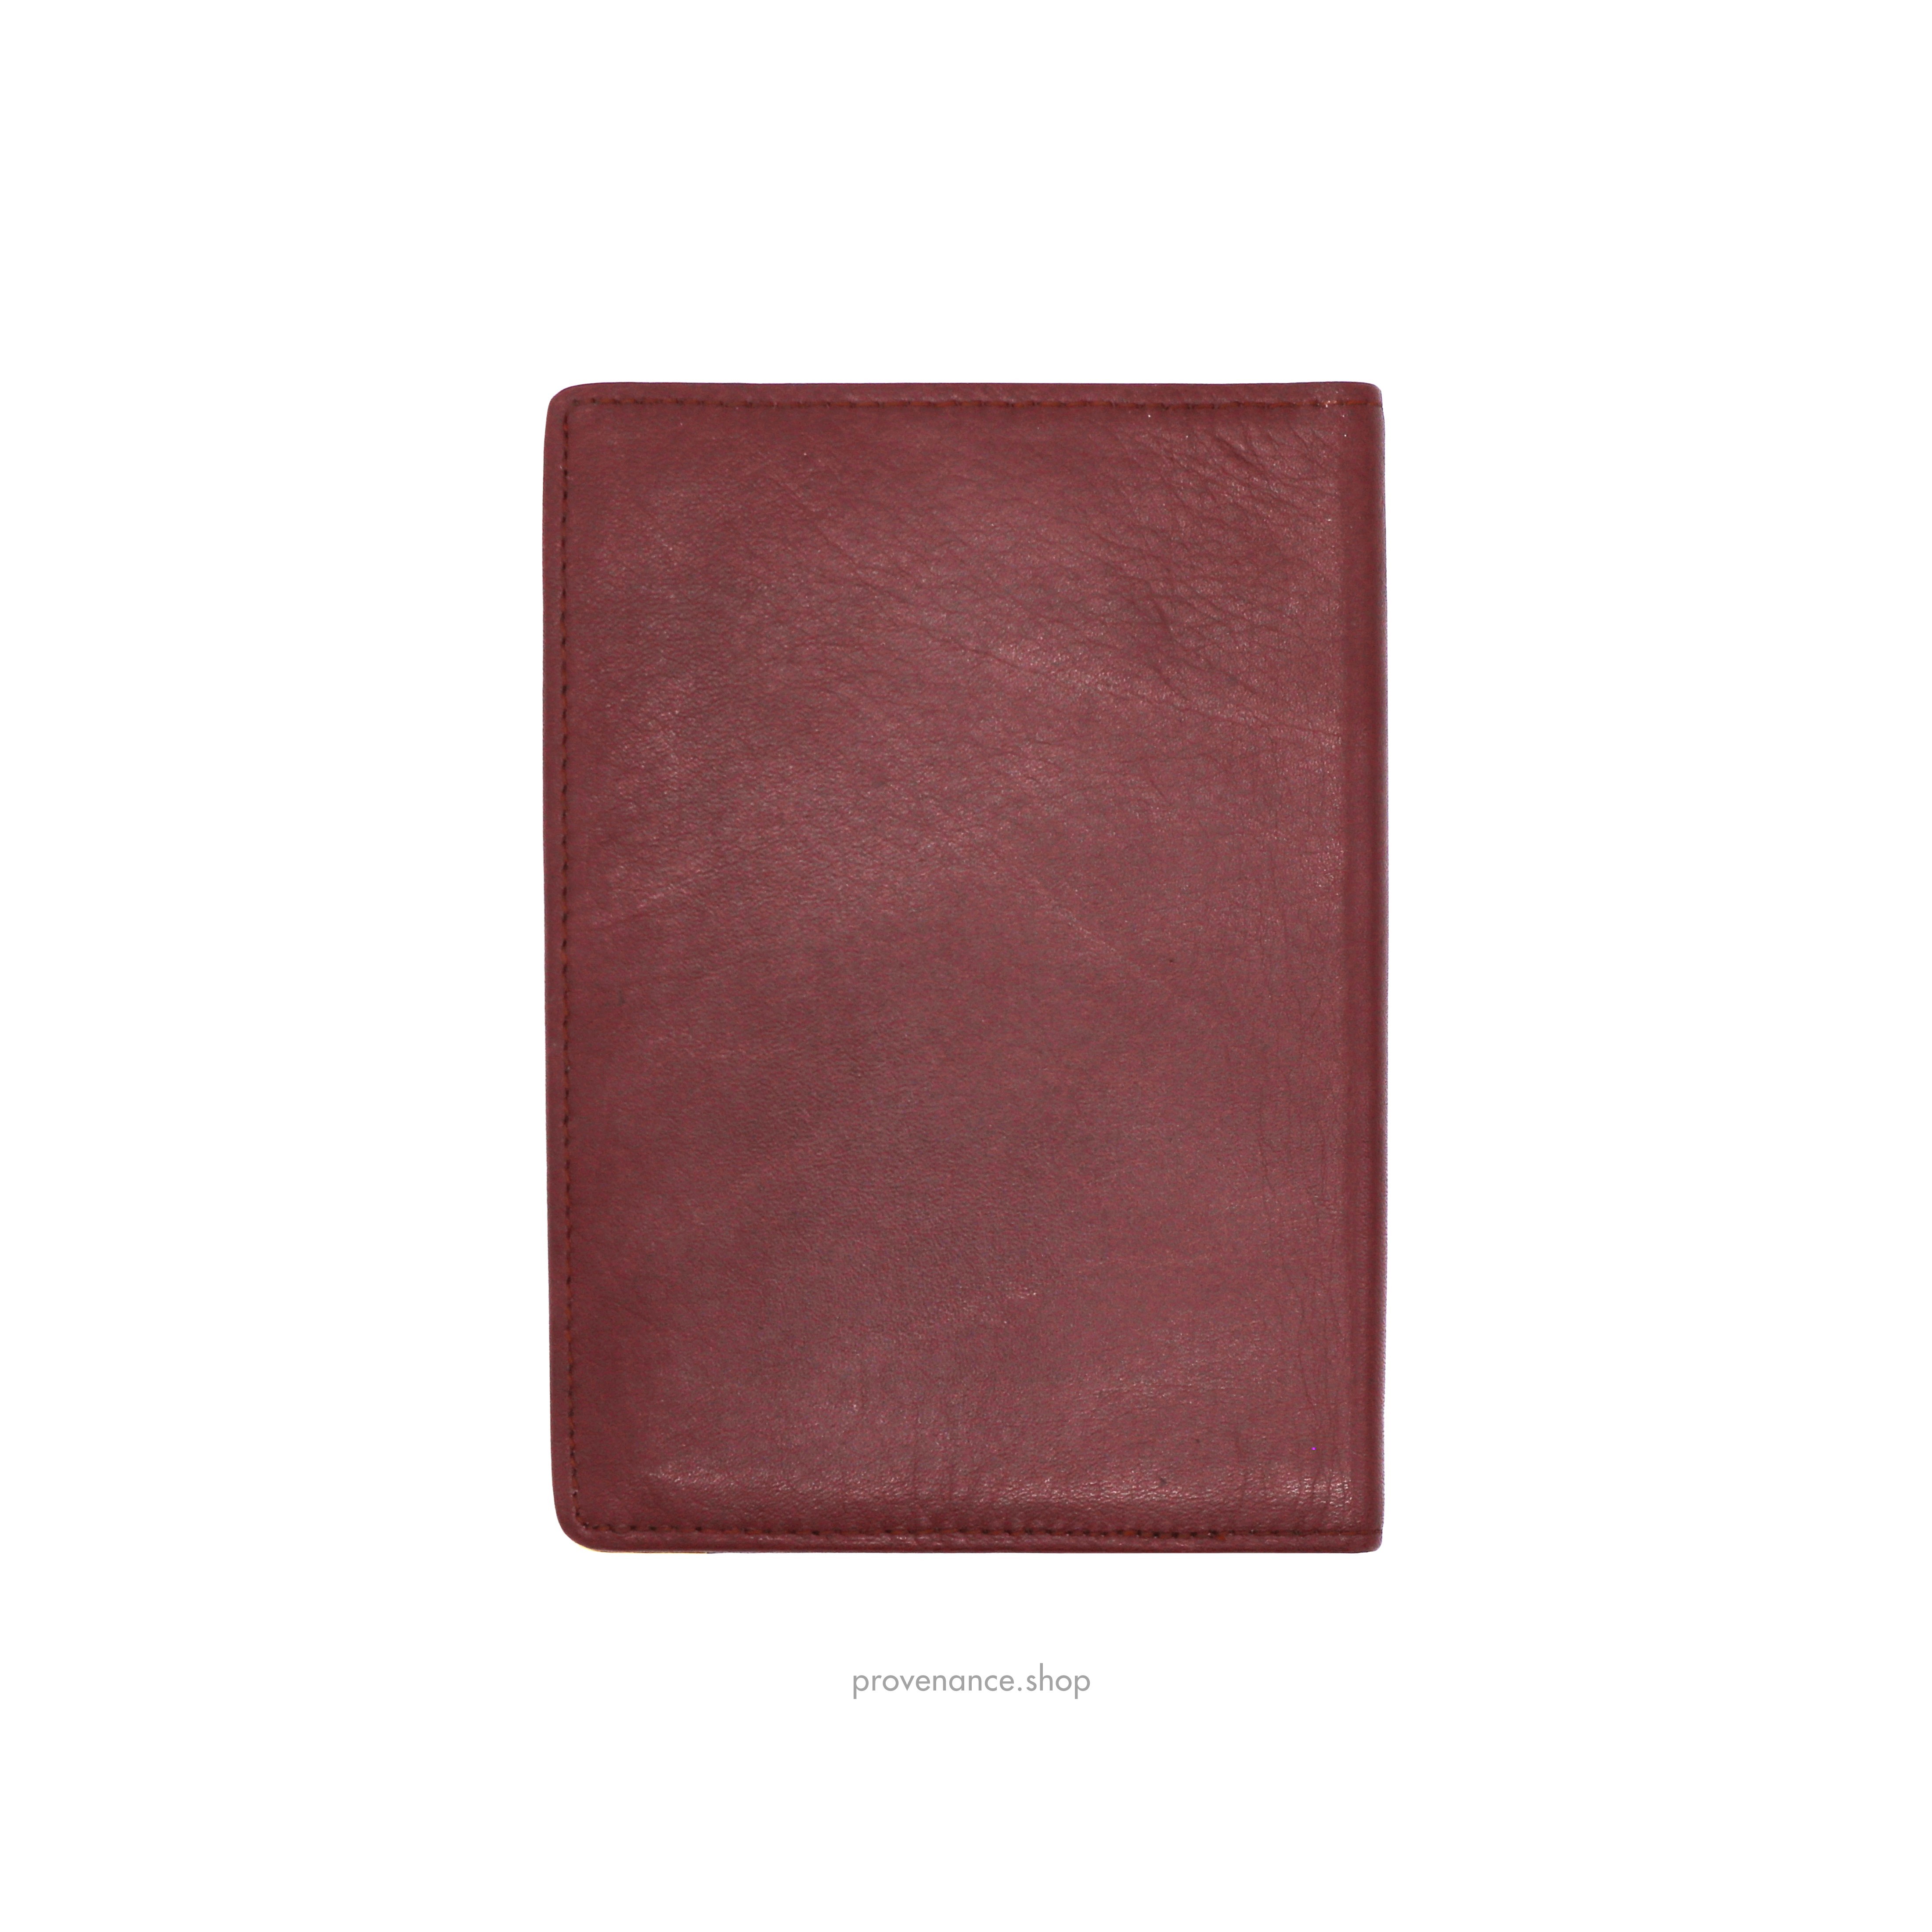 Cartier Passport Holder Wallet - Burgundy Leather - 2